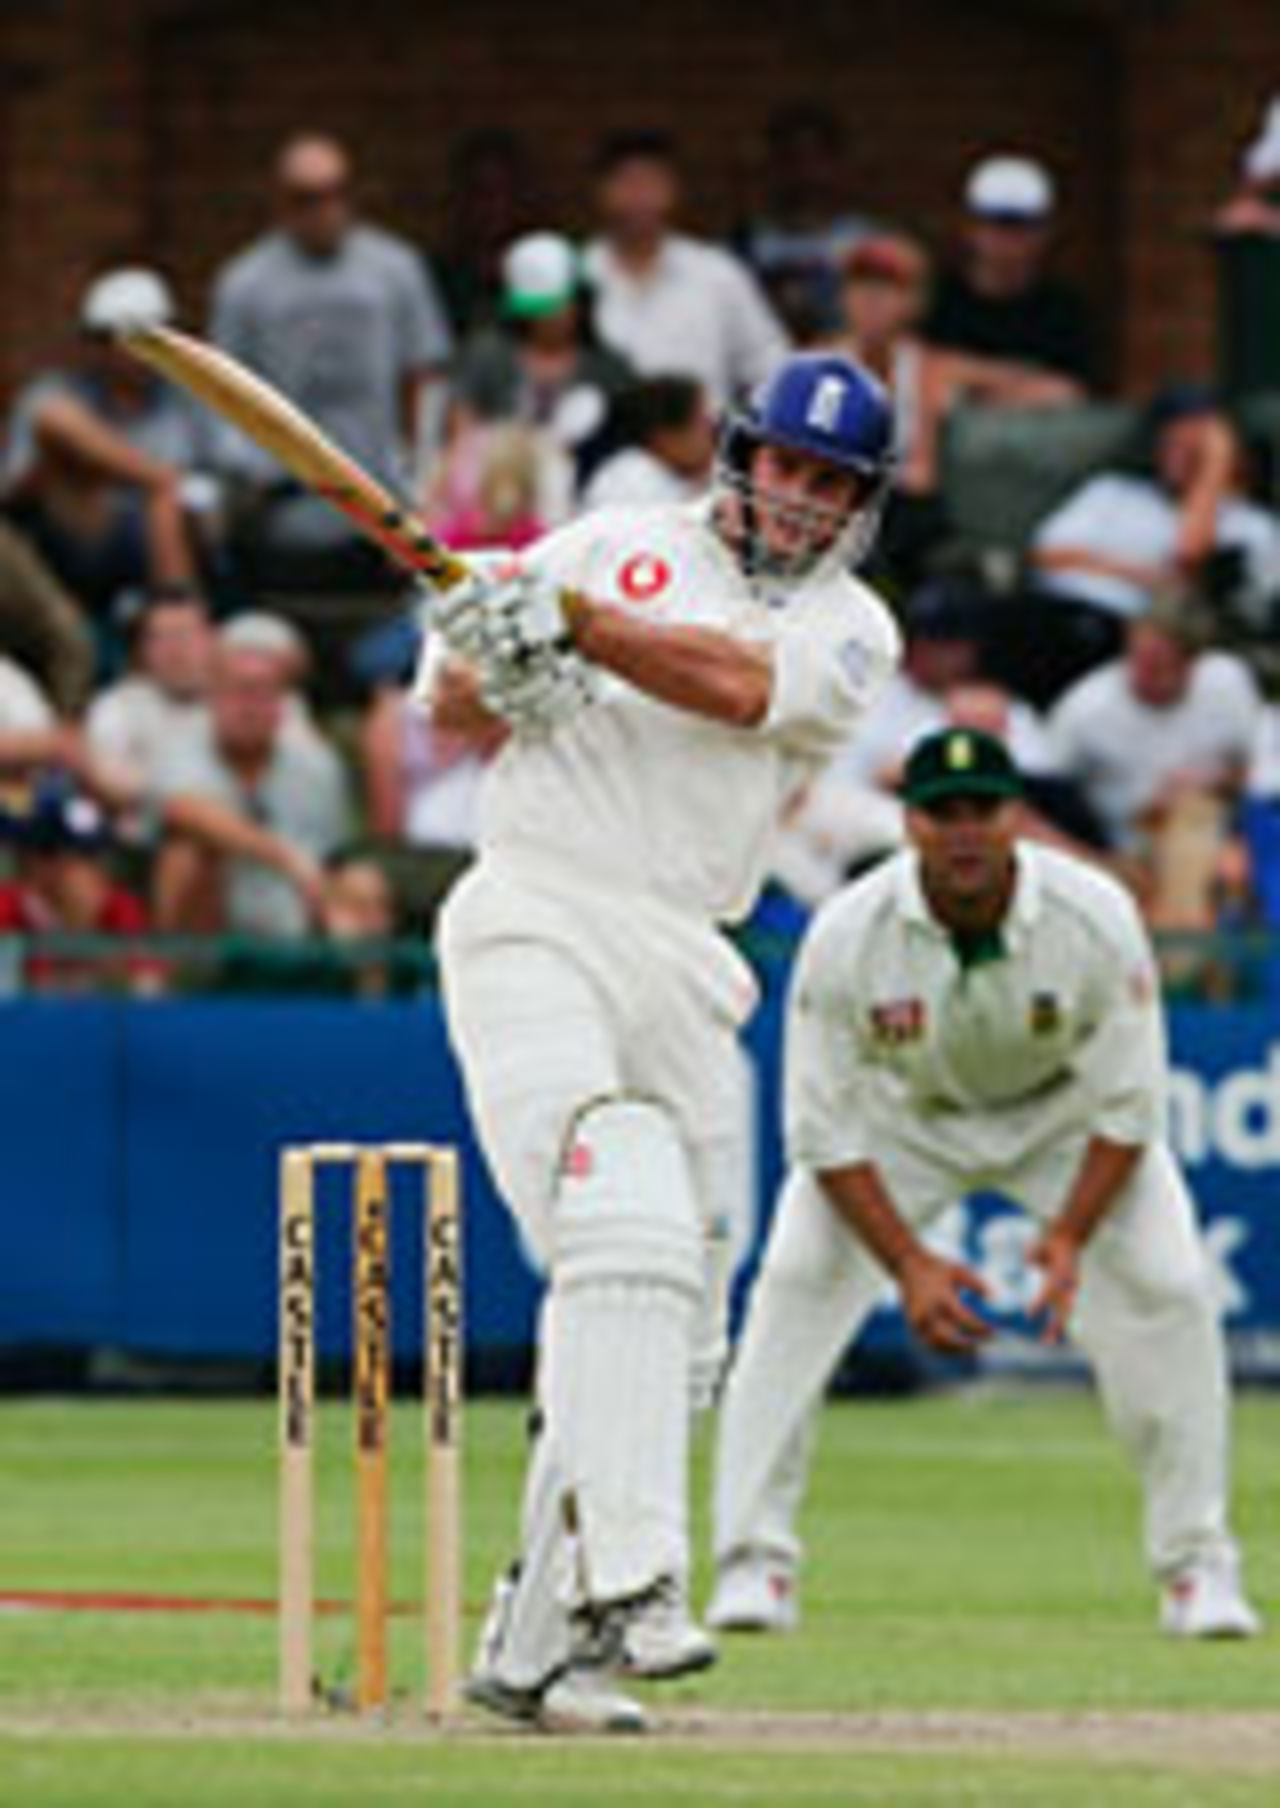 Andrew Strauss pulls, South Africa v England, 1st Test, Port Elizabeth, 4th day, December 20 2004